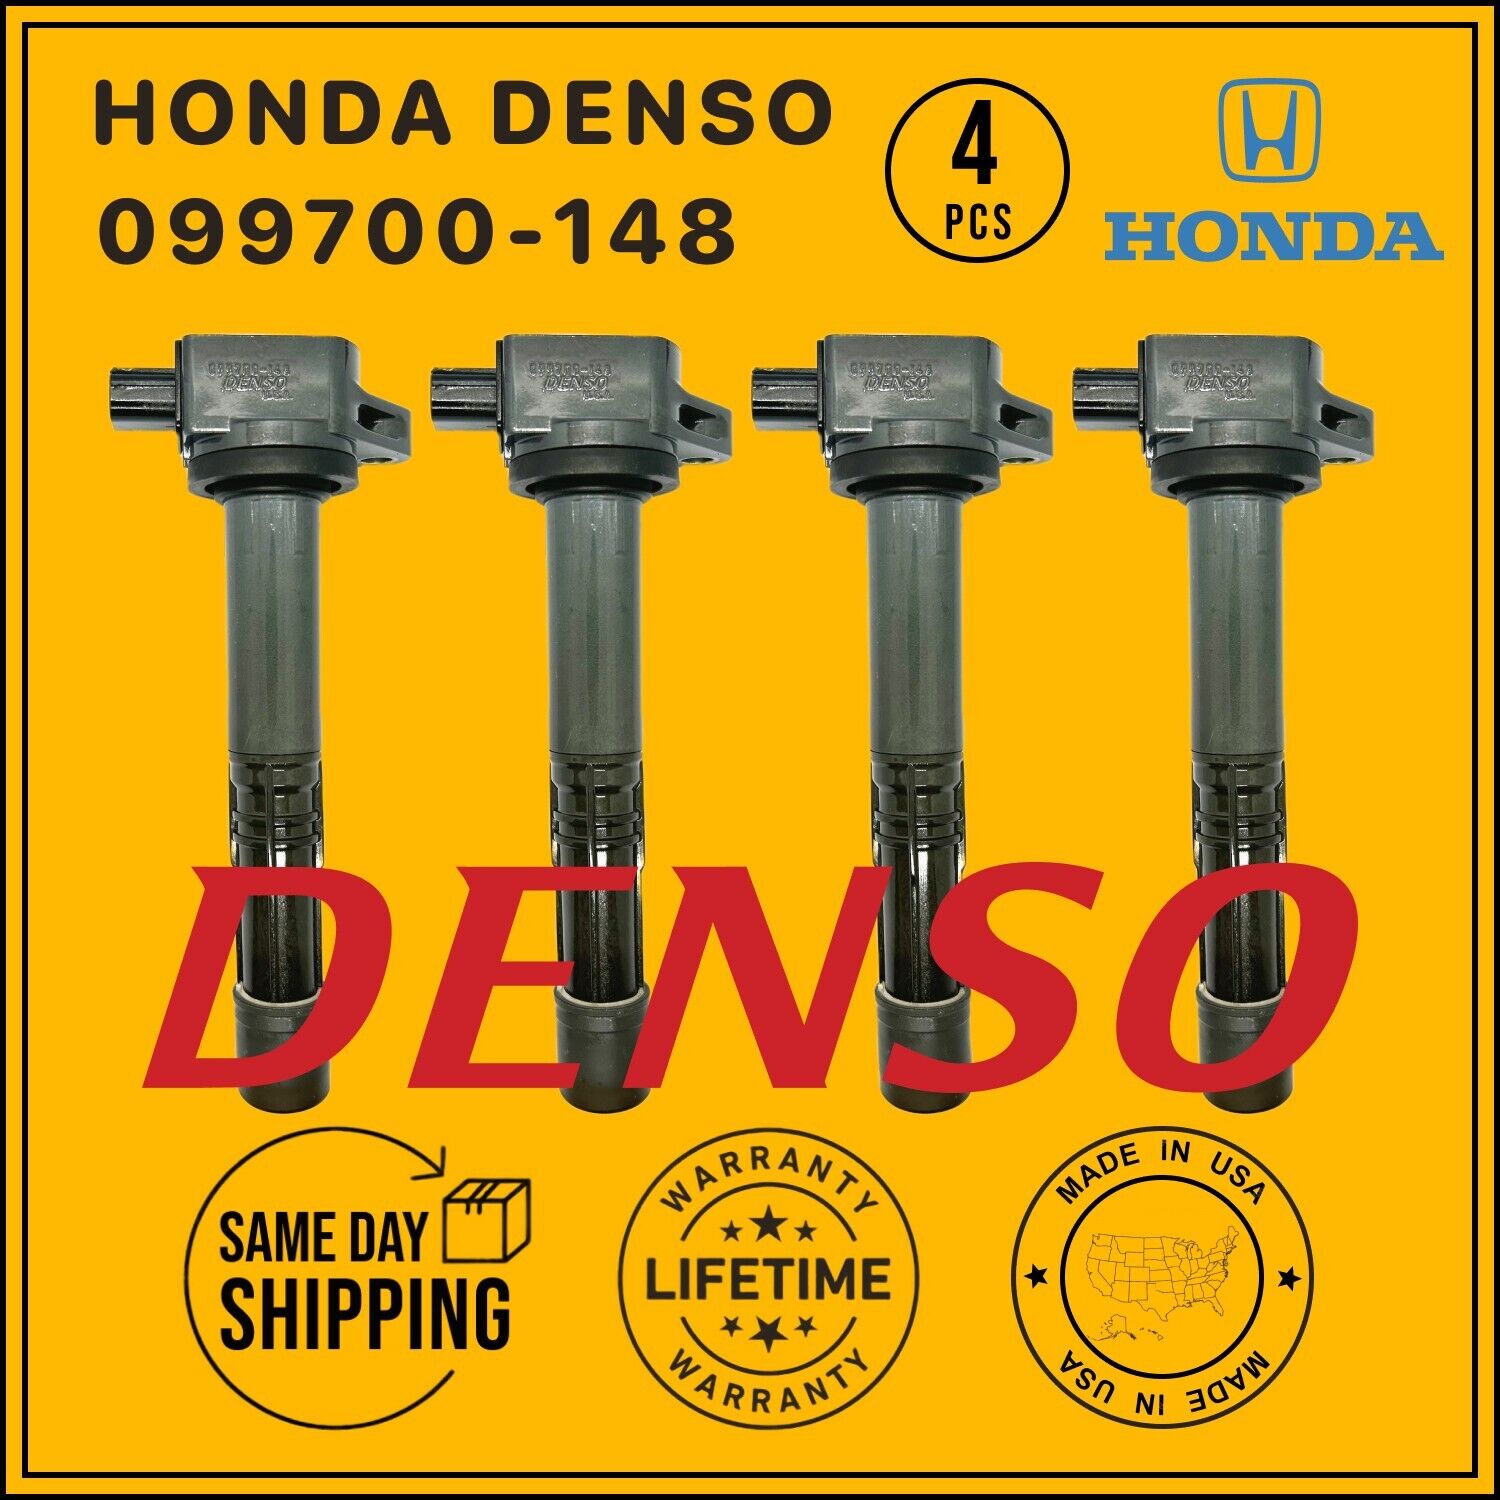 099700-148 Denso x4 Ignition Coils for 2008-2012 Honda Accord CR-V Civic 2.4L L4